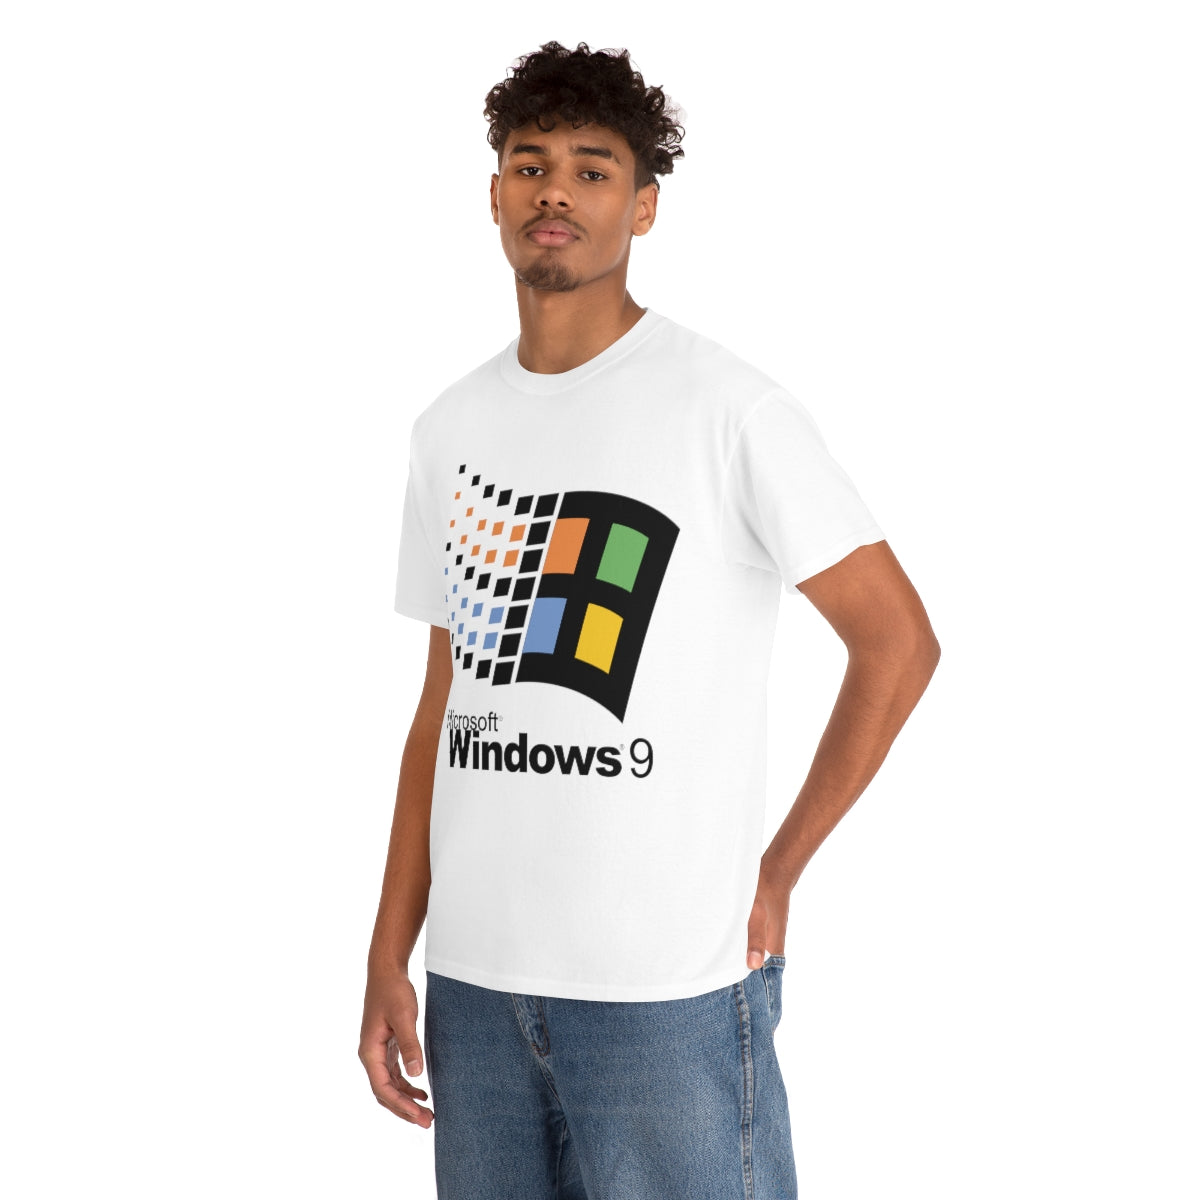 Windows 9 Shirt